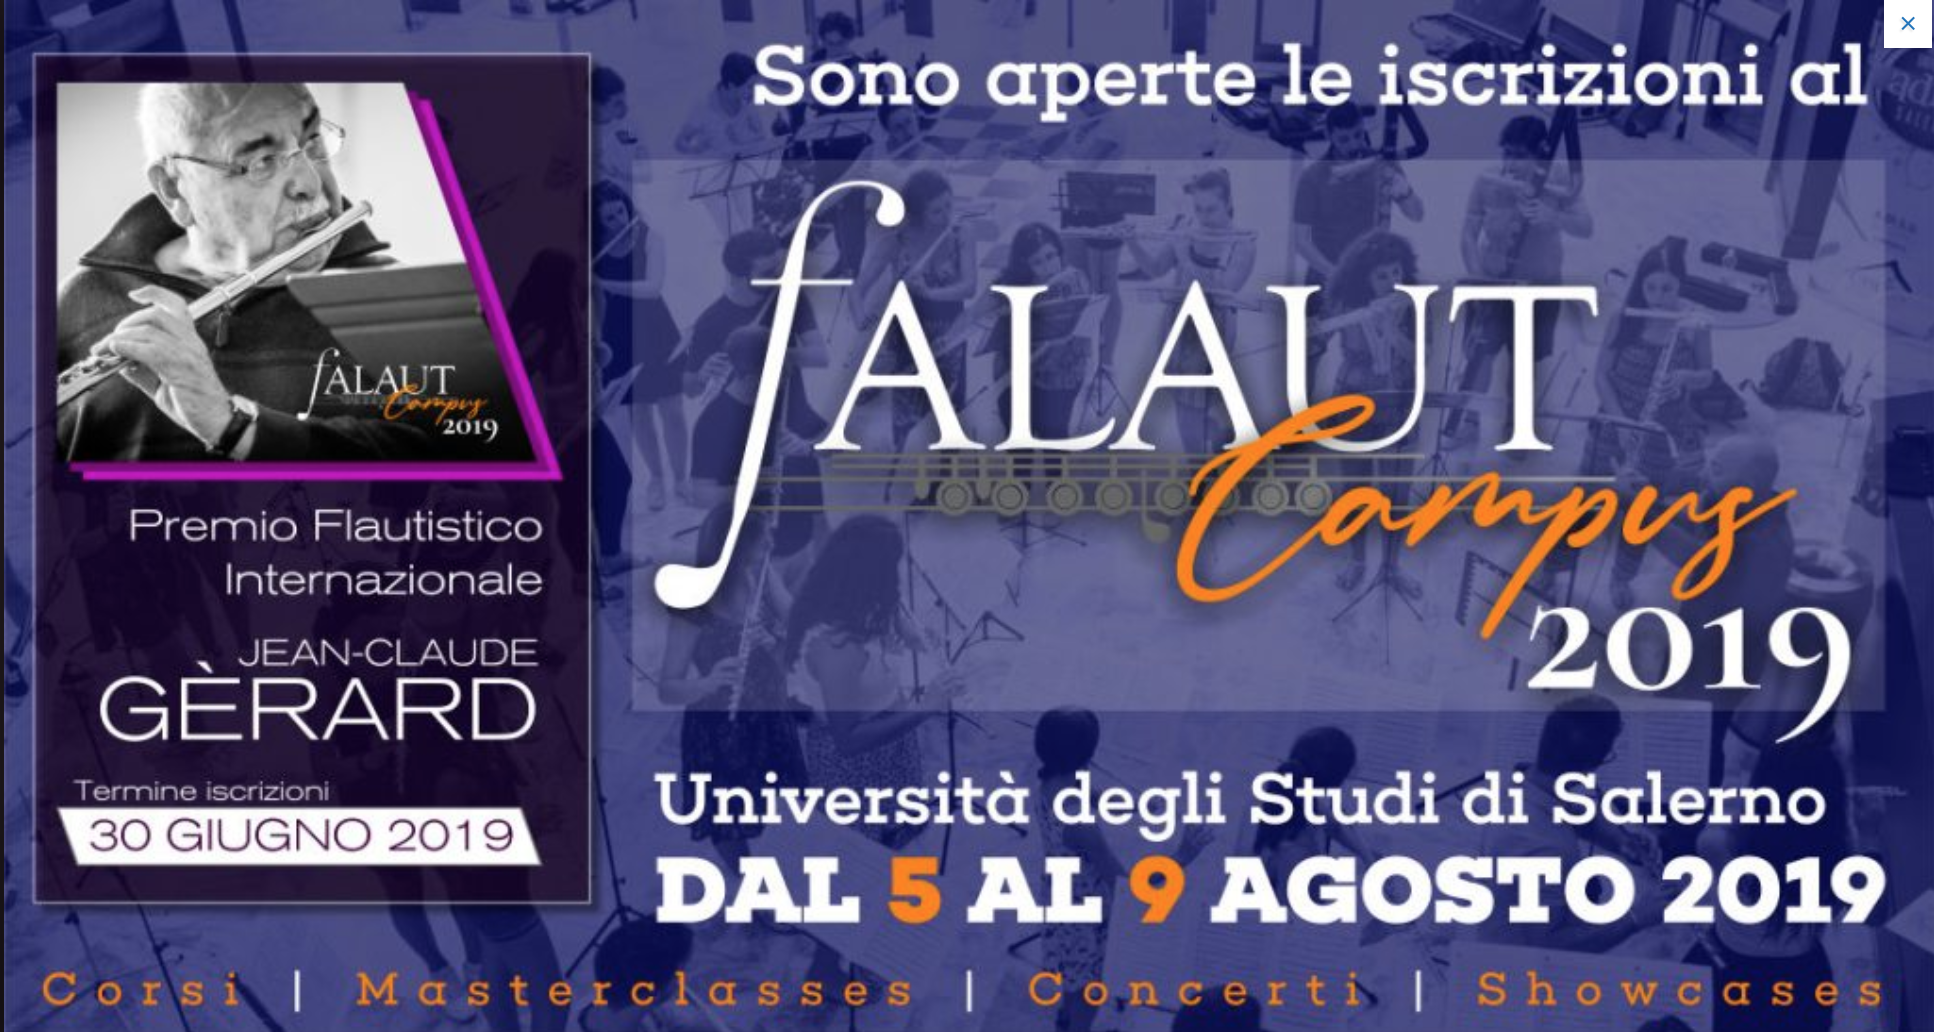 Falaut Campus, Fisciano (SA) 5-9 August 